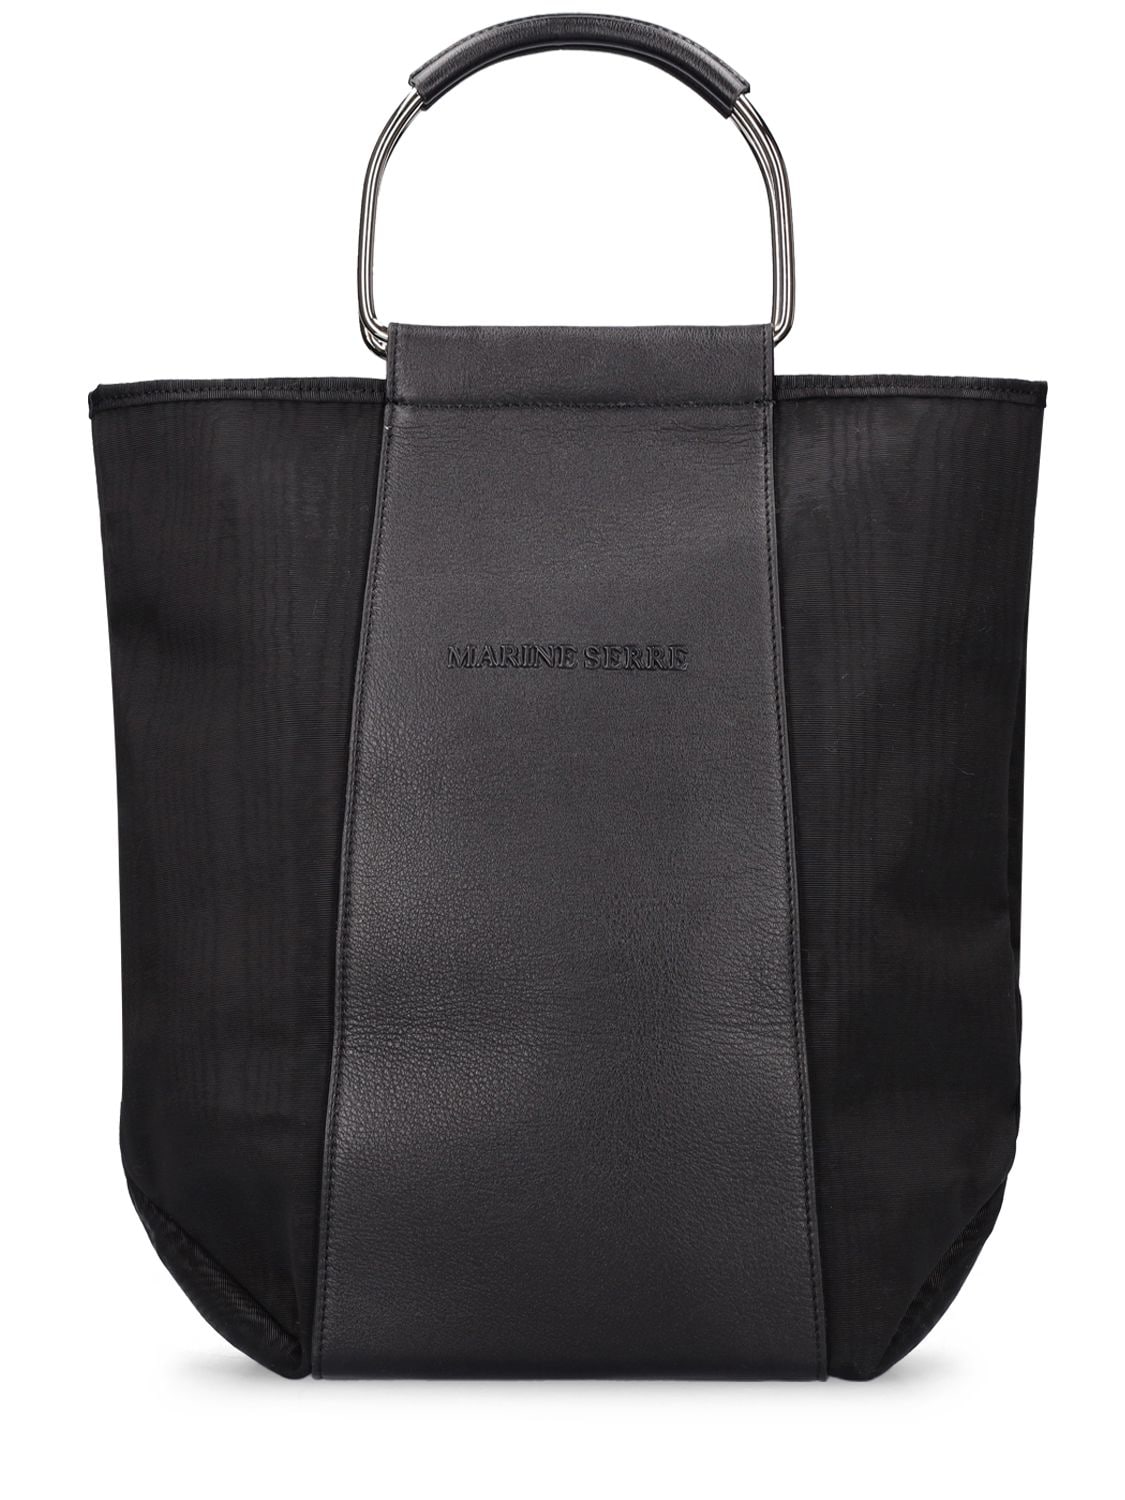 Marine Serre Moire Top Handle Shopper Bag In Black